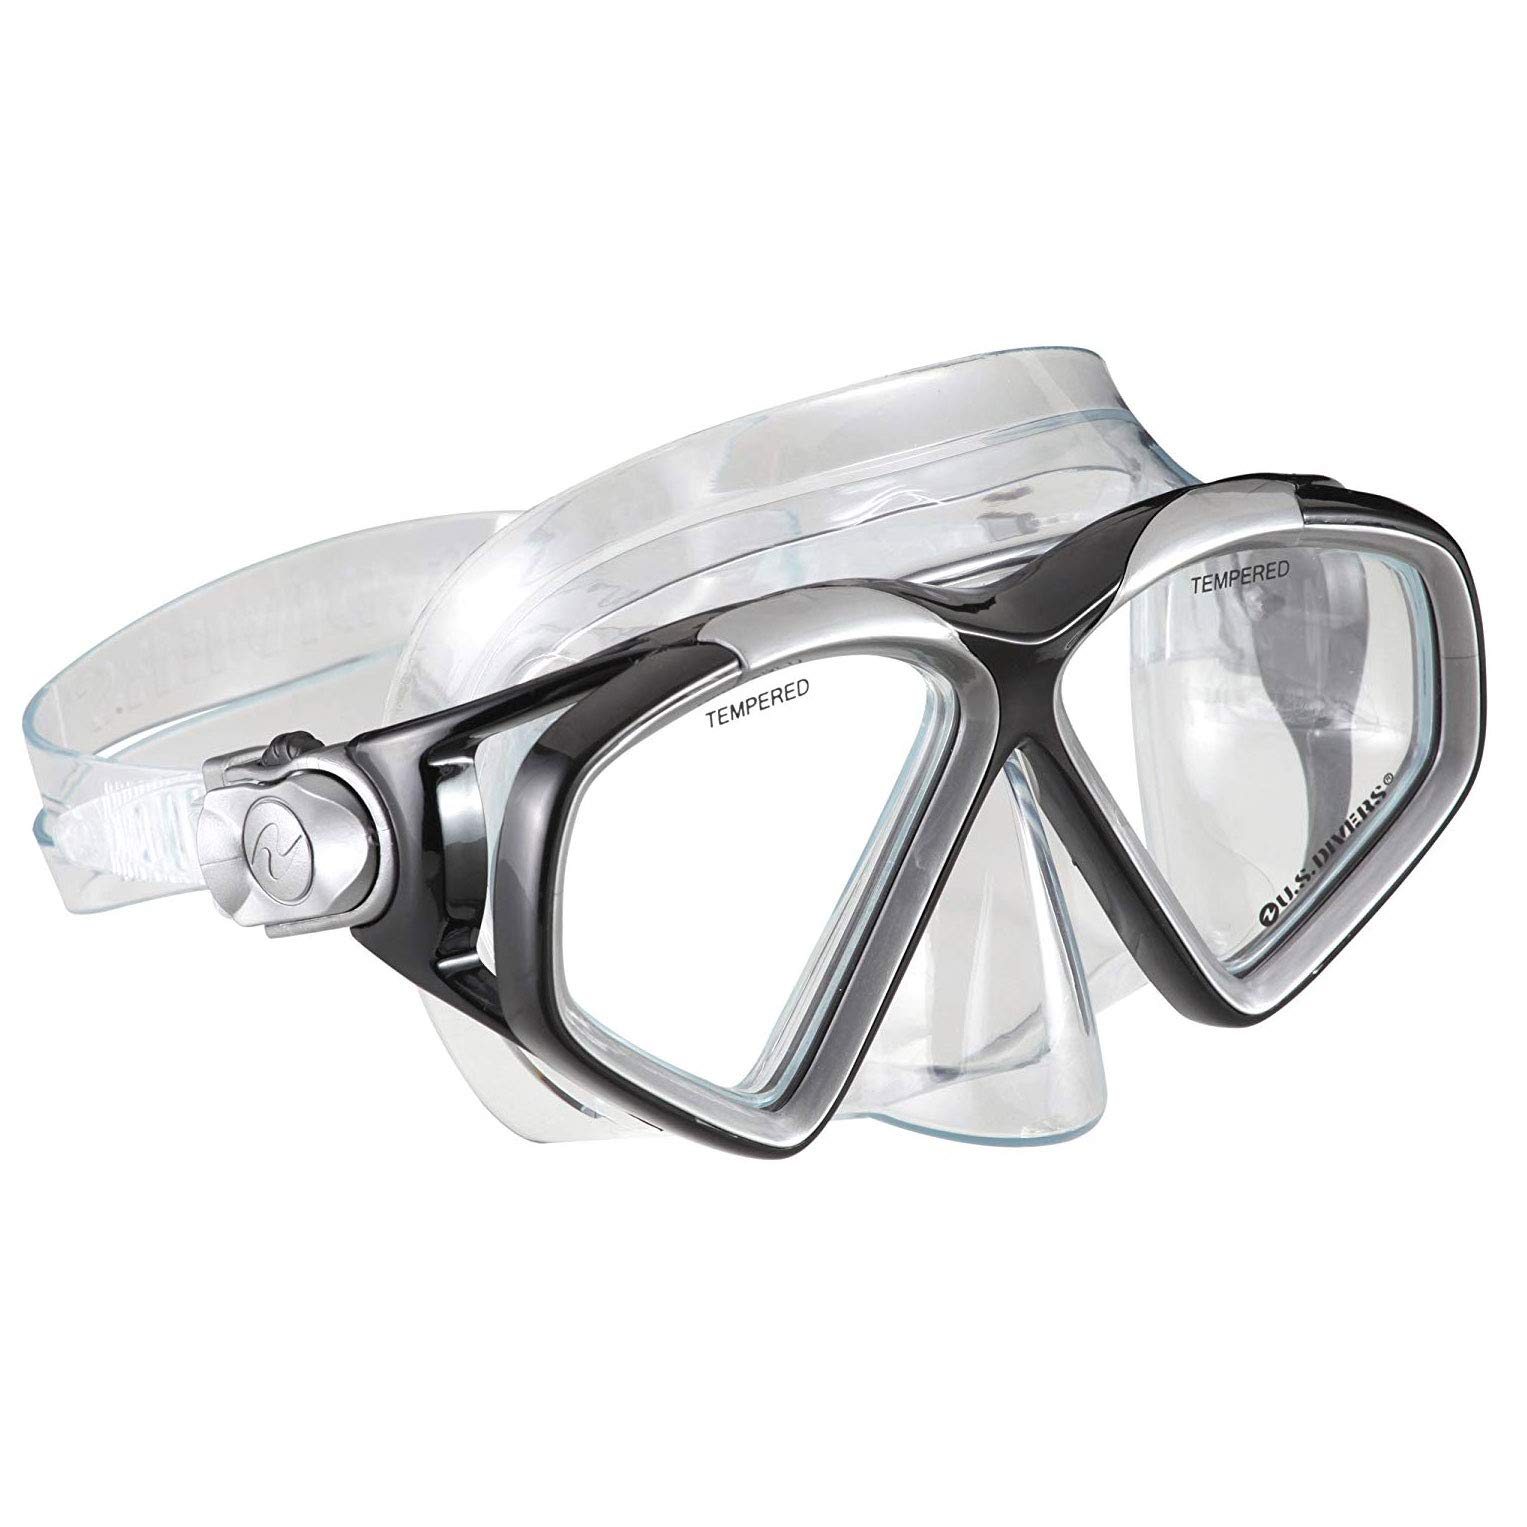 Mua . Divers Adult Cozumel Mask/Seabreeze II Snorkel/Proflex  Fins/Gearbag trên Amazon Mỹ chính hãng 2023 | Giaonhan247